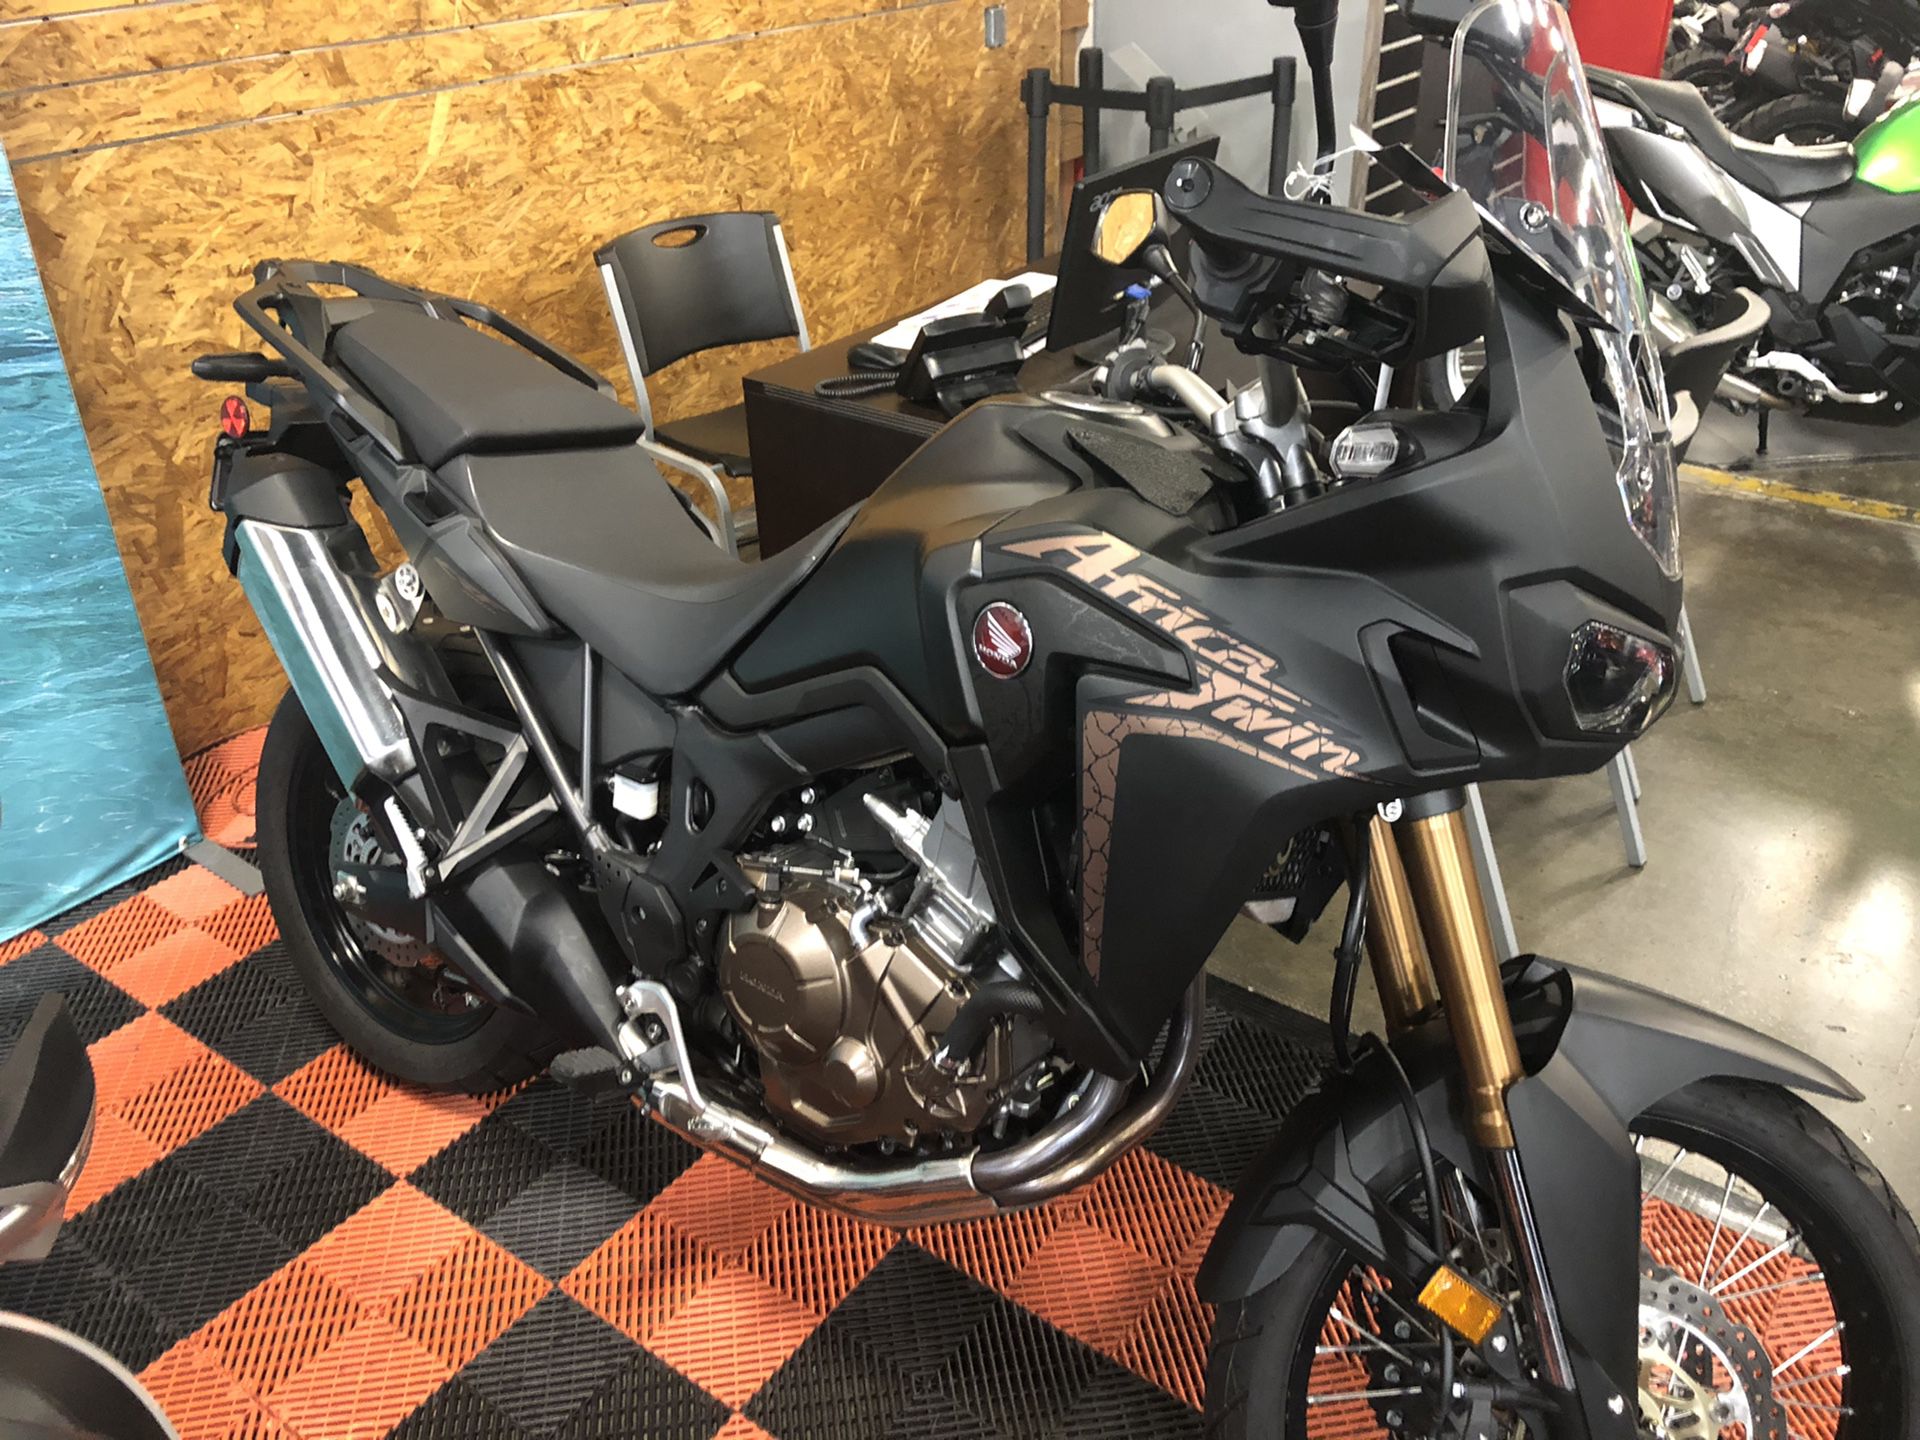 2018 Honda Africa Twin Black low miles Demo bike!!!